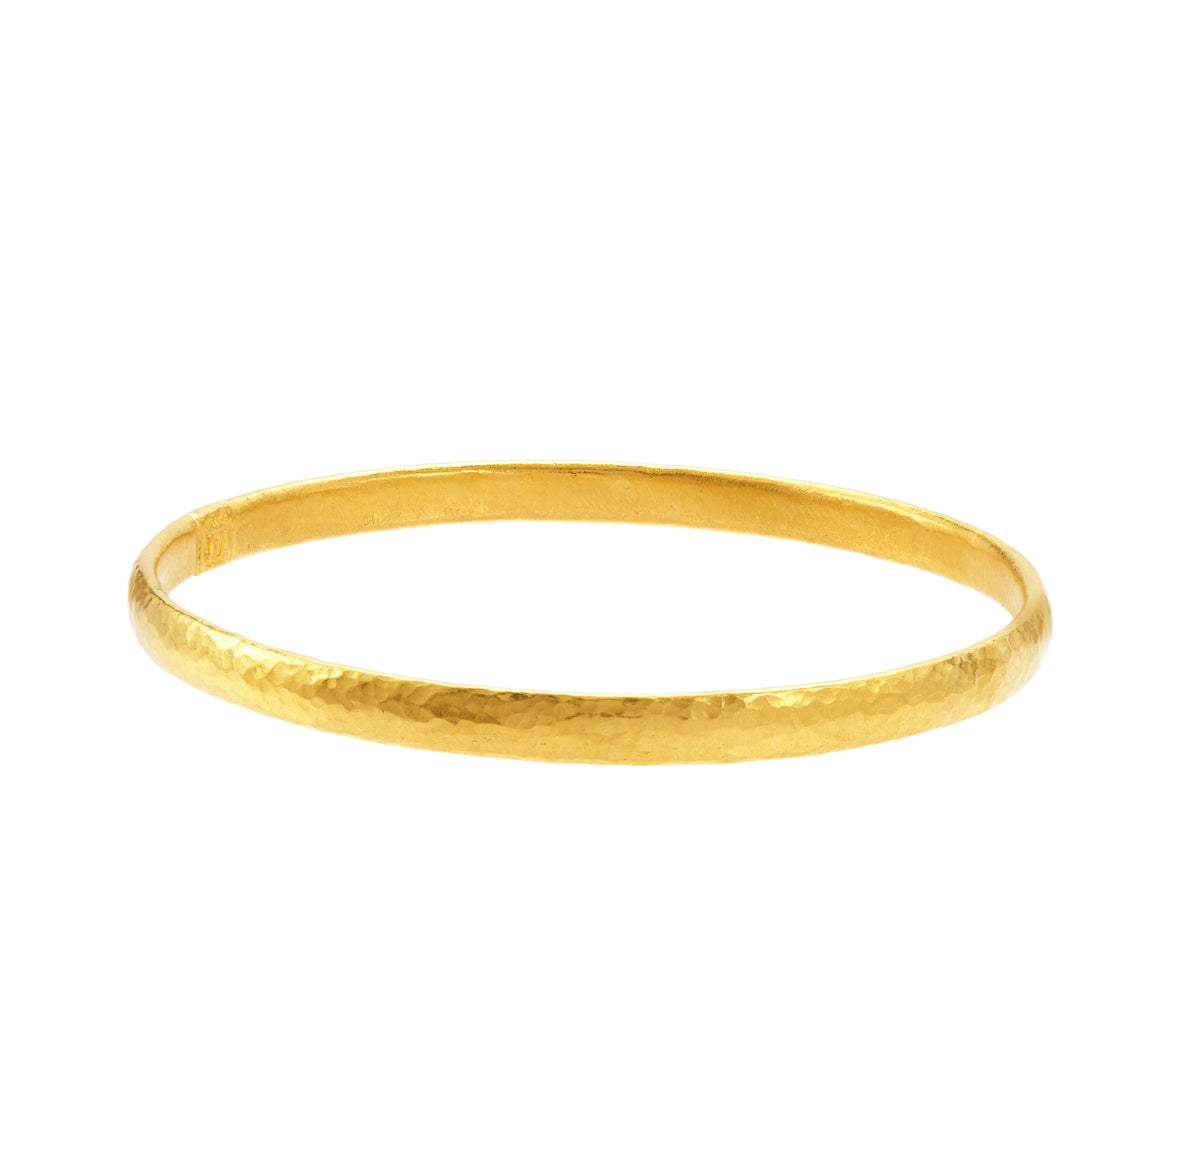 GURHAN, GURHAN Hoopla Gold Plain Bangle Bracelet, 5.5mm Wide, No Stone